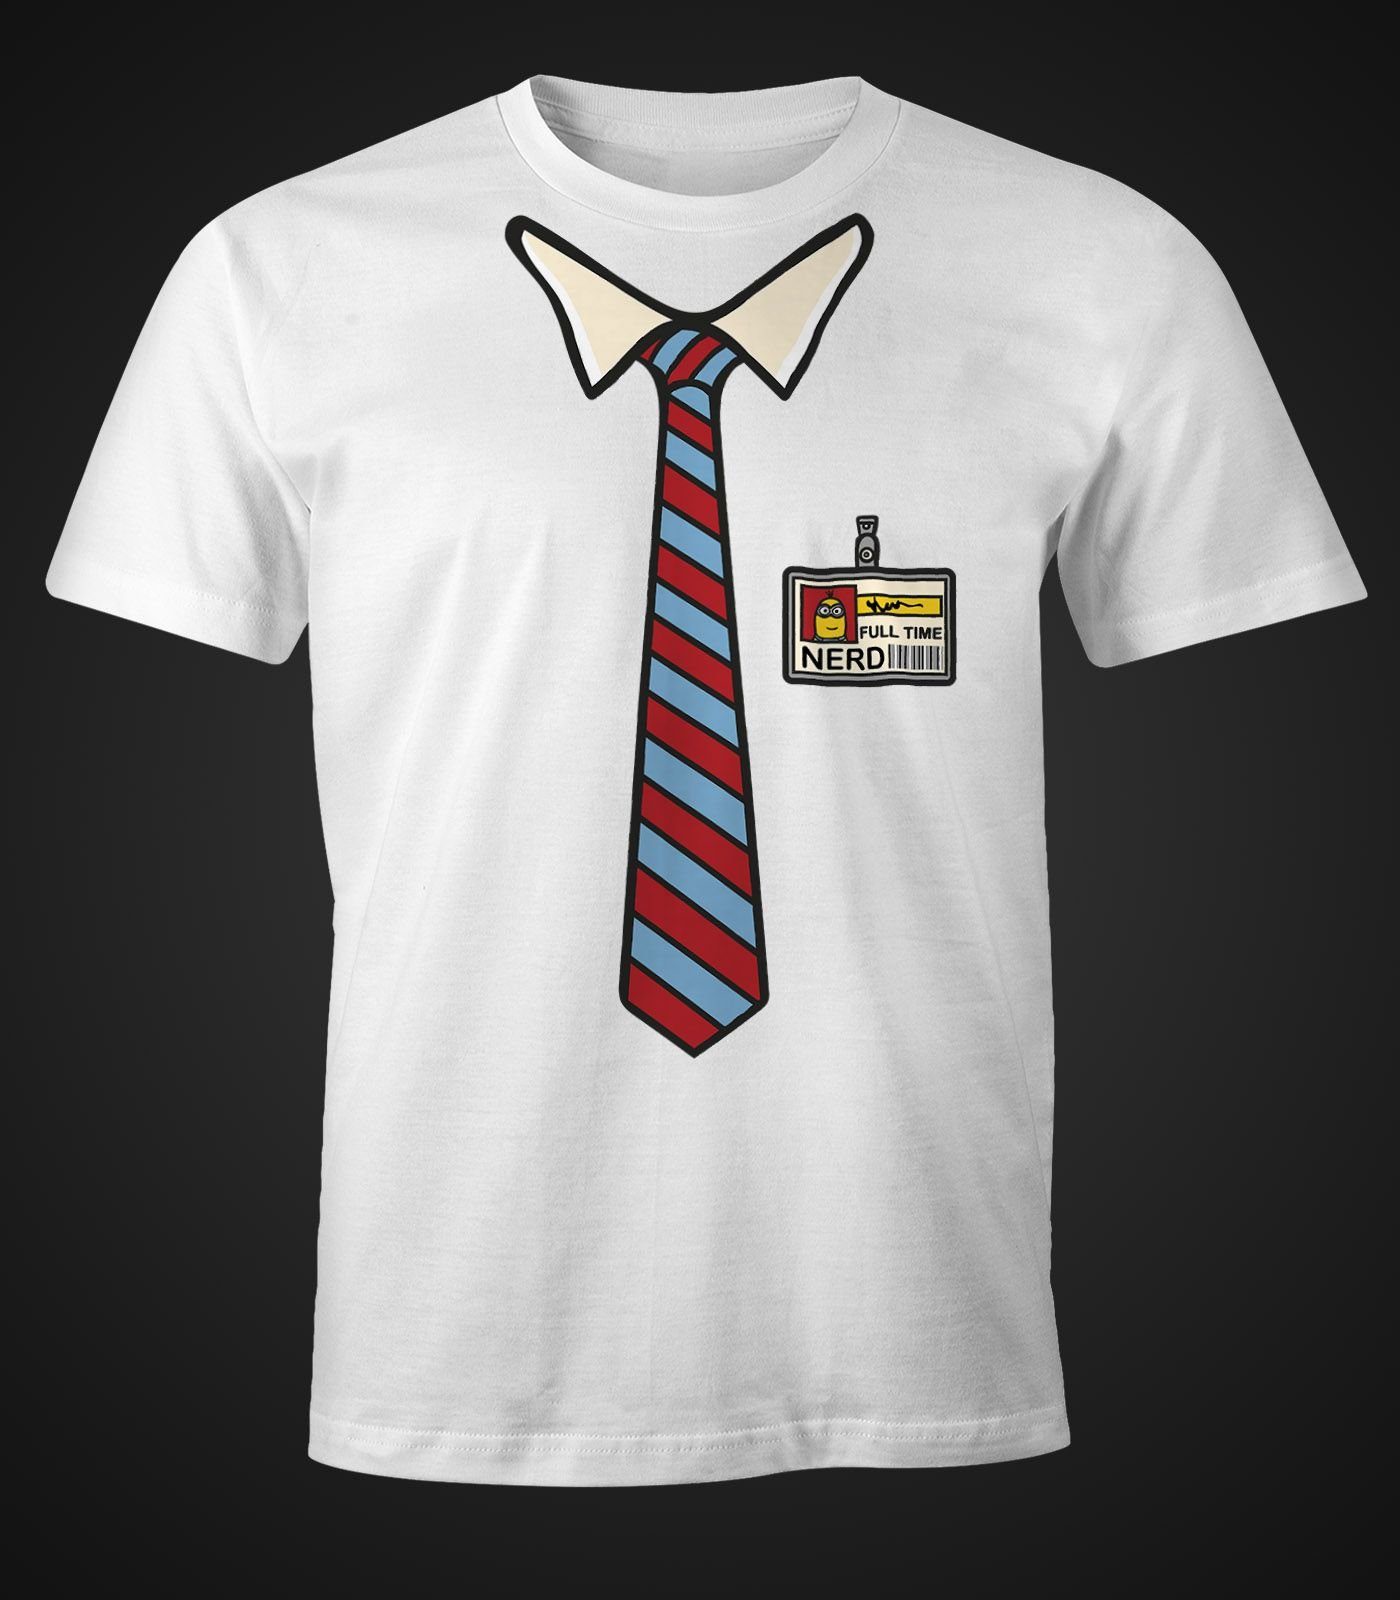 MoonWorks Print-Shirt Herren T-Shirt Full Print mit Time Fun-Shirt Geek weiß Nerd Moonworks®